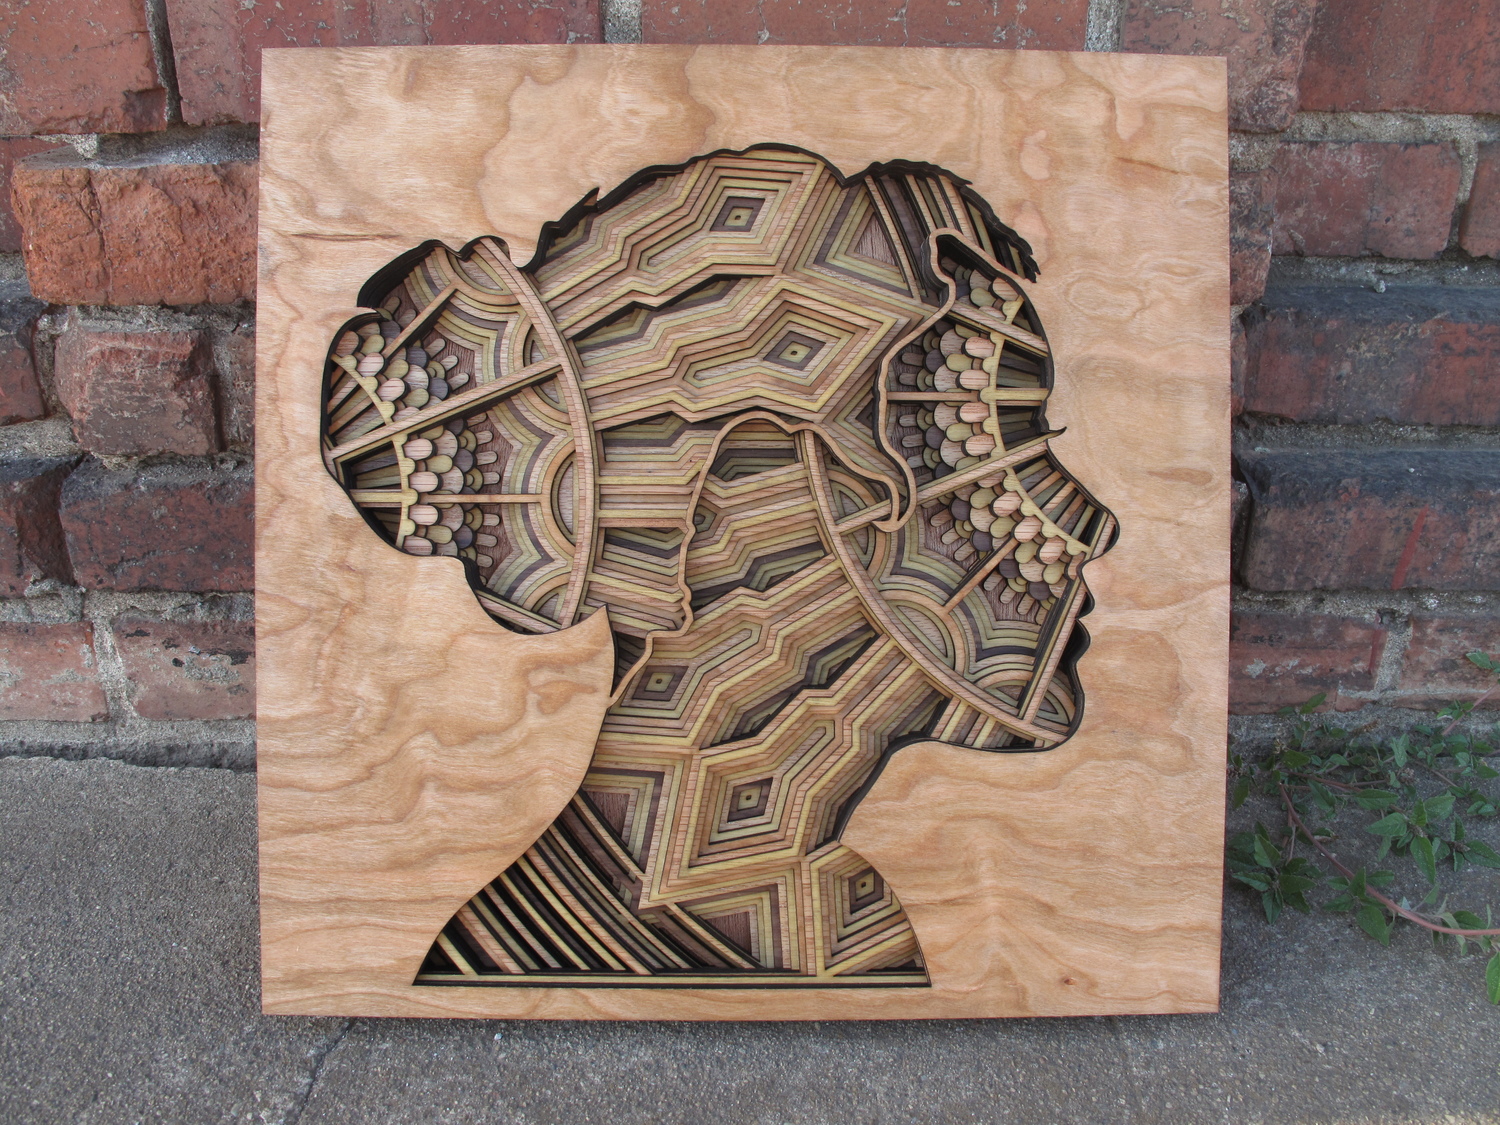 Laser-Cut Wood Relief Sculptures by Gabriel Schama #artpeople